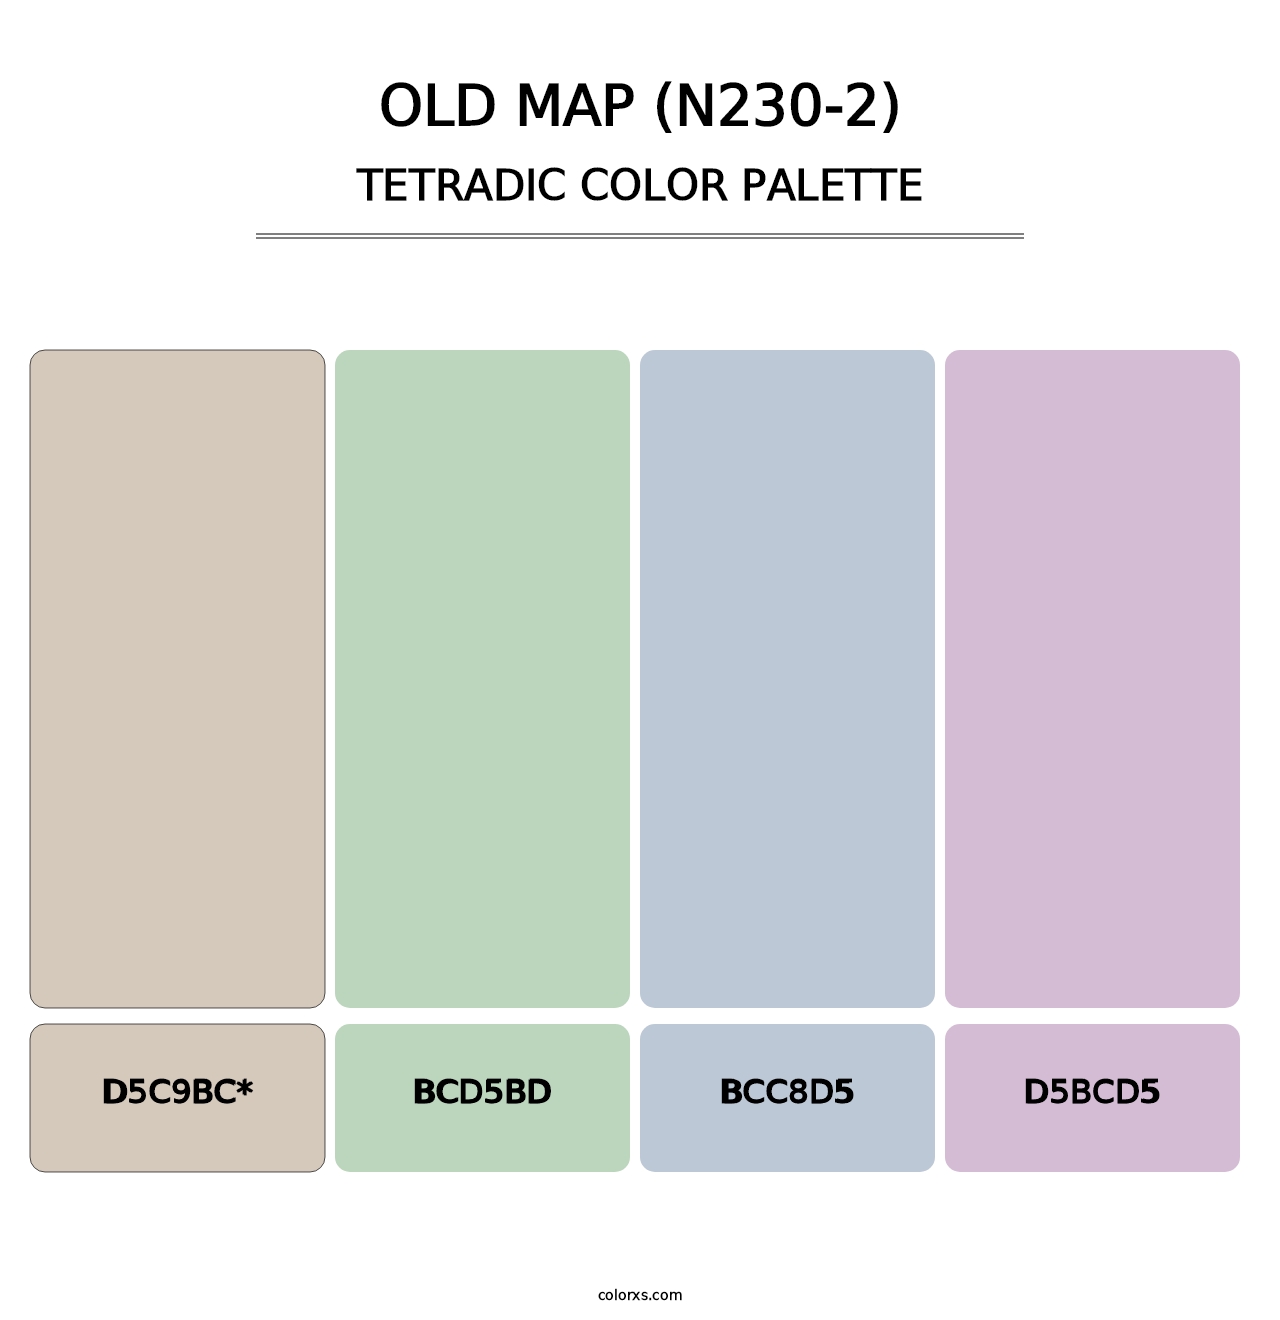 Old Map (N230-2) - Tetradic Color Palette